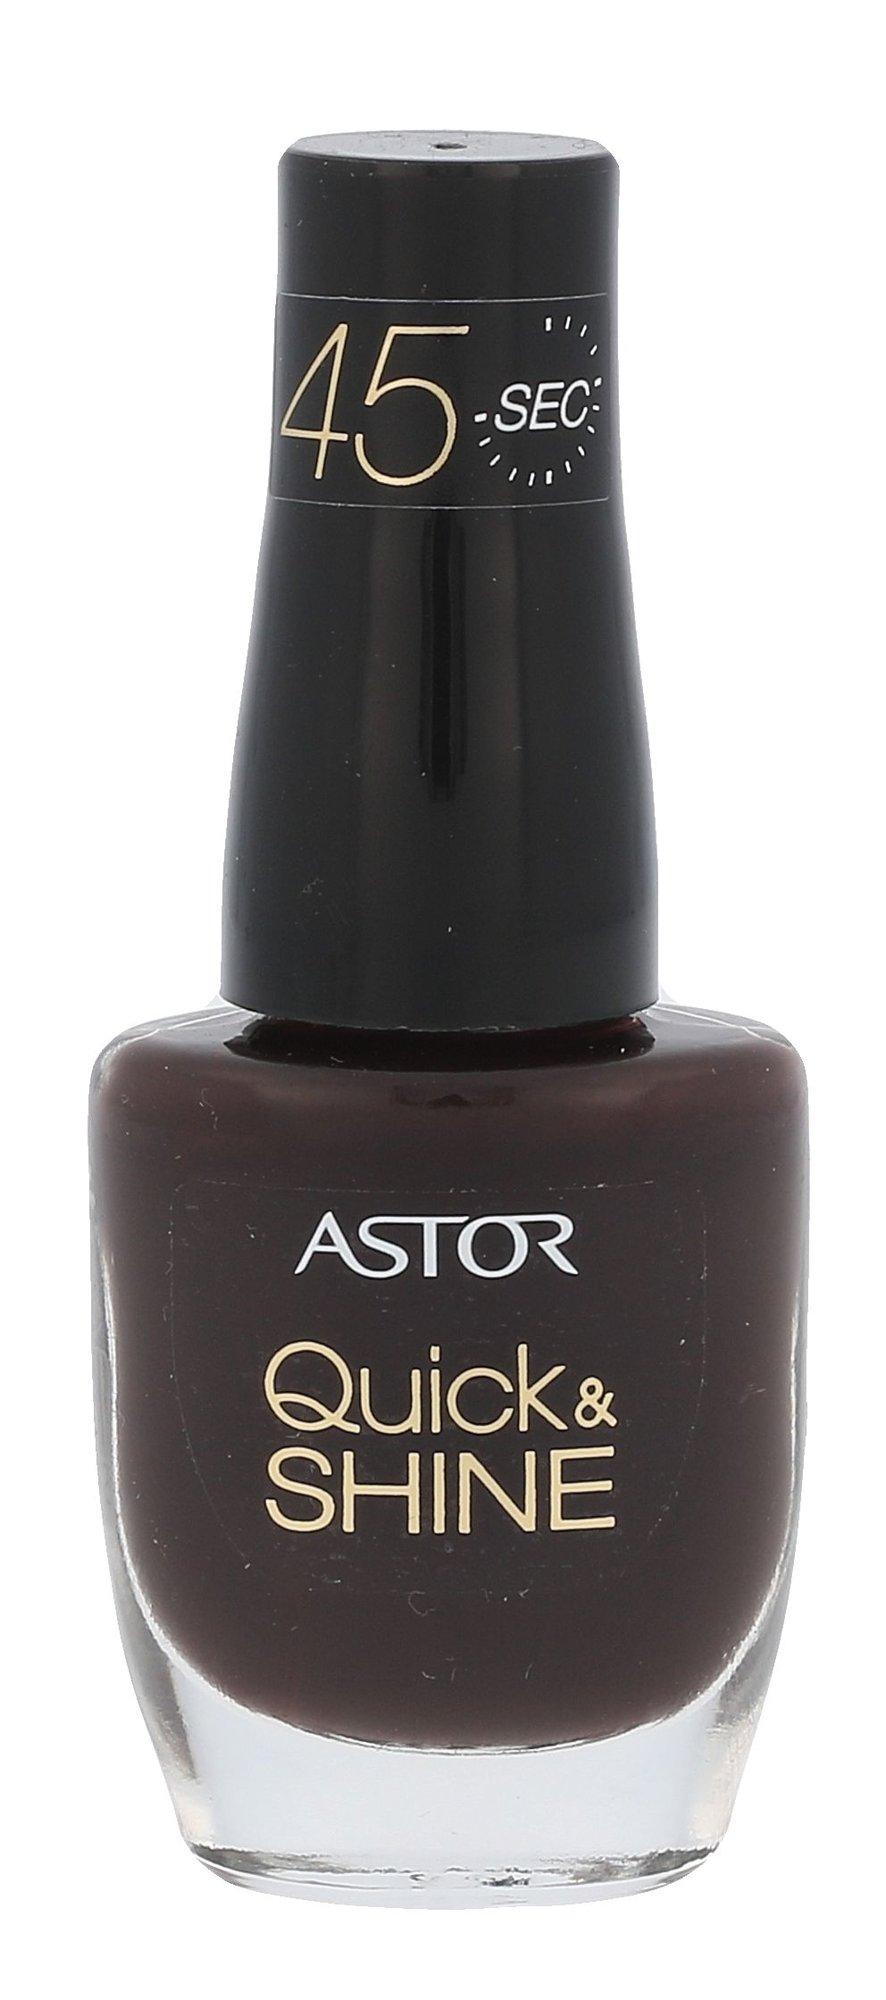 Astor Quick & Shine Nail Polish